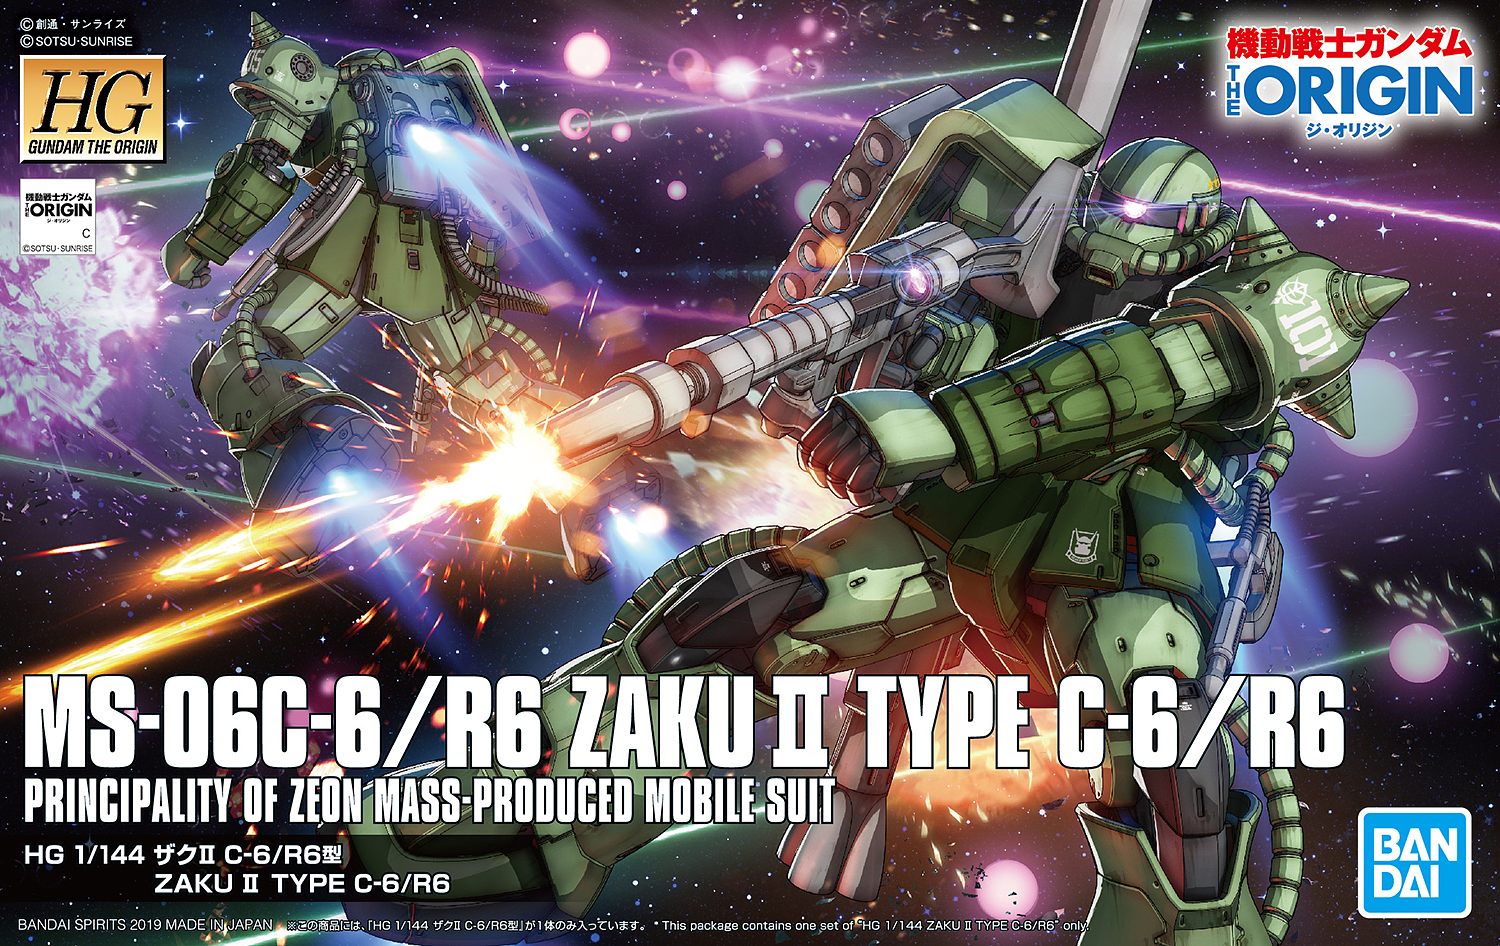 HG MS-06C-6/R6 Zaku II Type C-6/R6 1/144